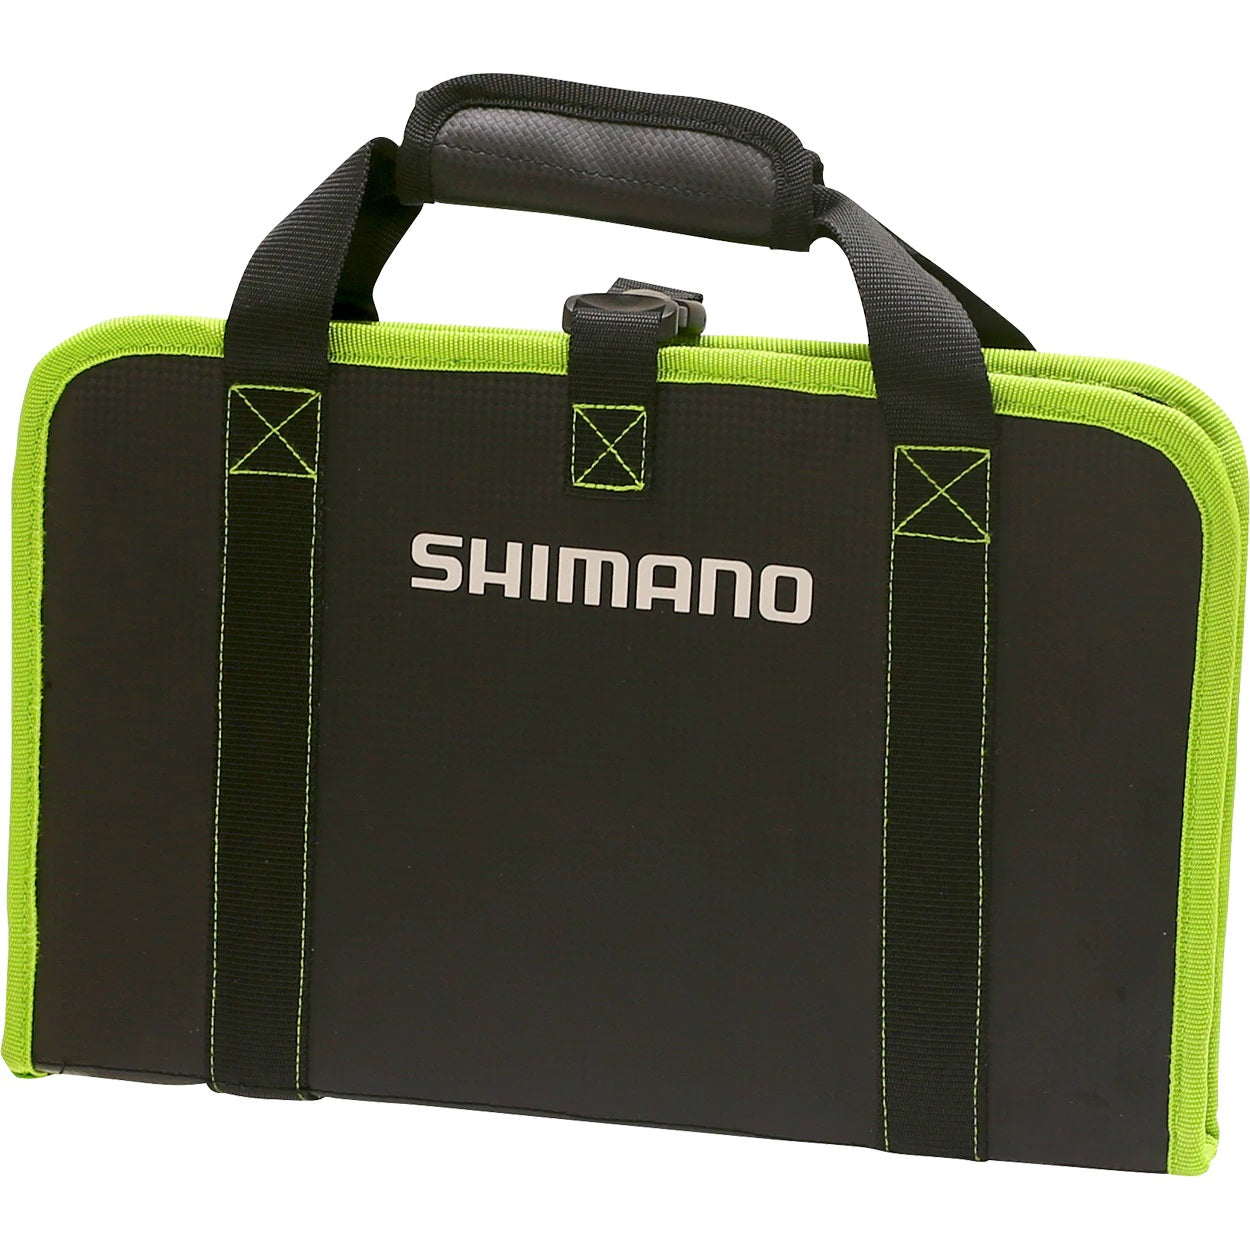 Shimano LUG1503 Jig Storage Case Black Green - Discontinued Mega Clearance